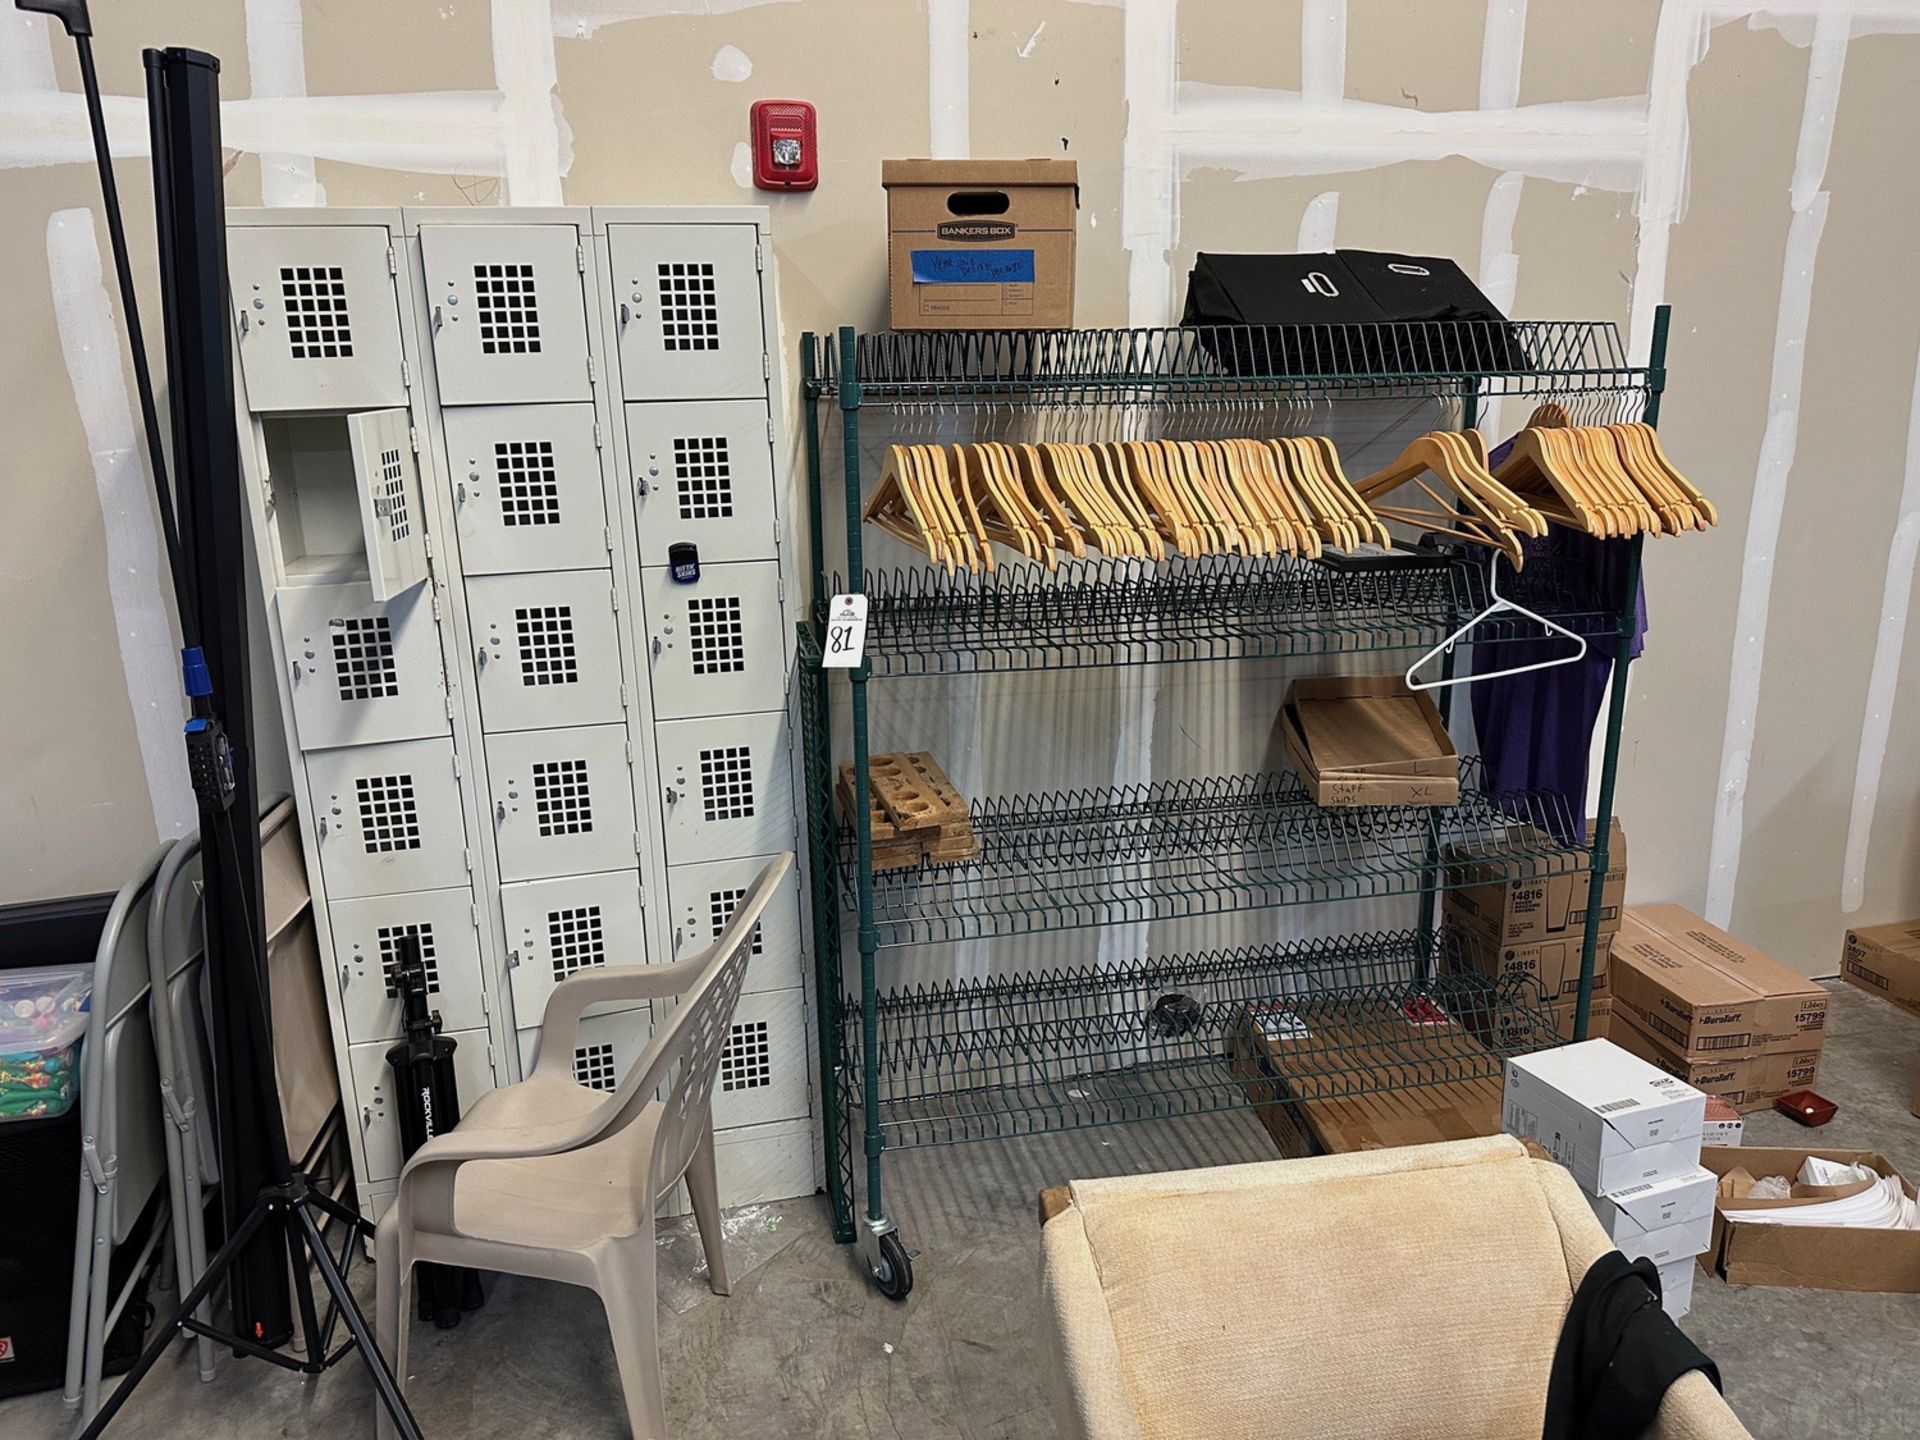 Lot of Employee Storage Space - Lockers, Coat Rack, Chairs